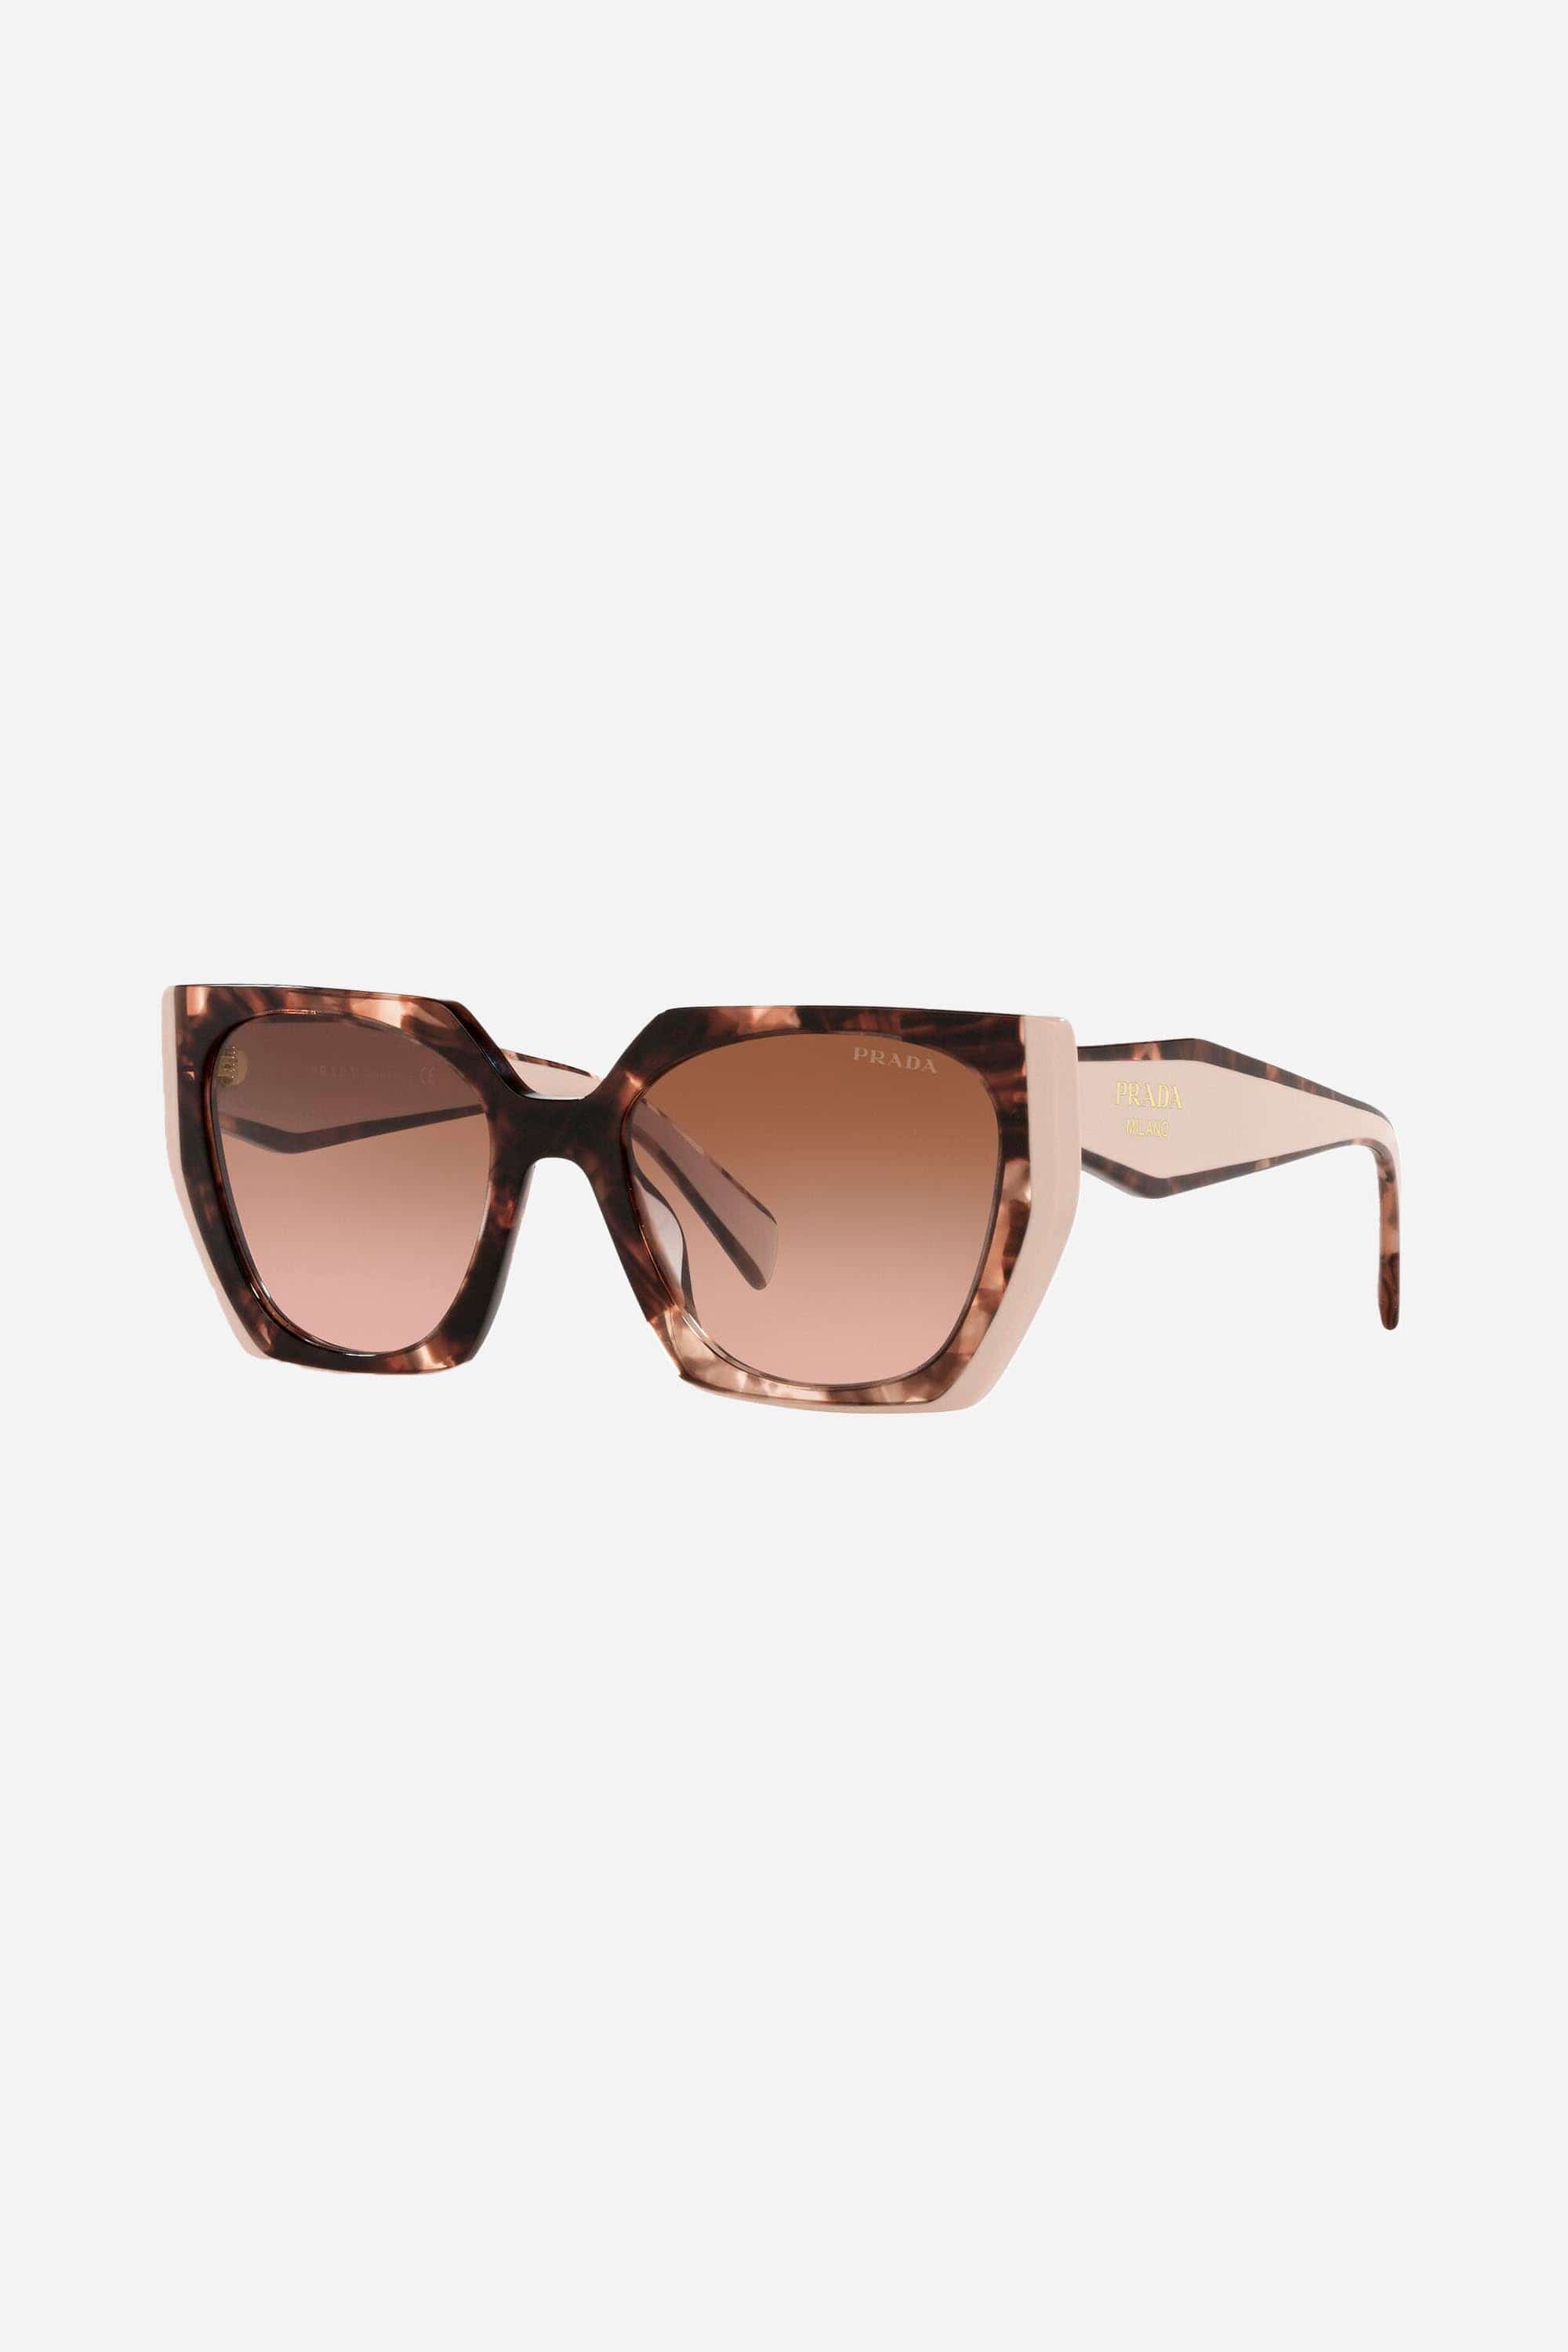 Prada oversized cat eye havana and ivory sunglasses - Eyewear Club